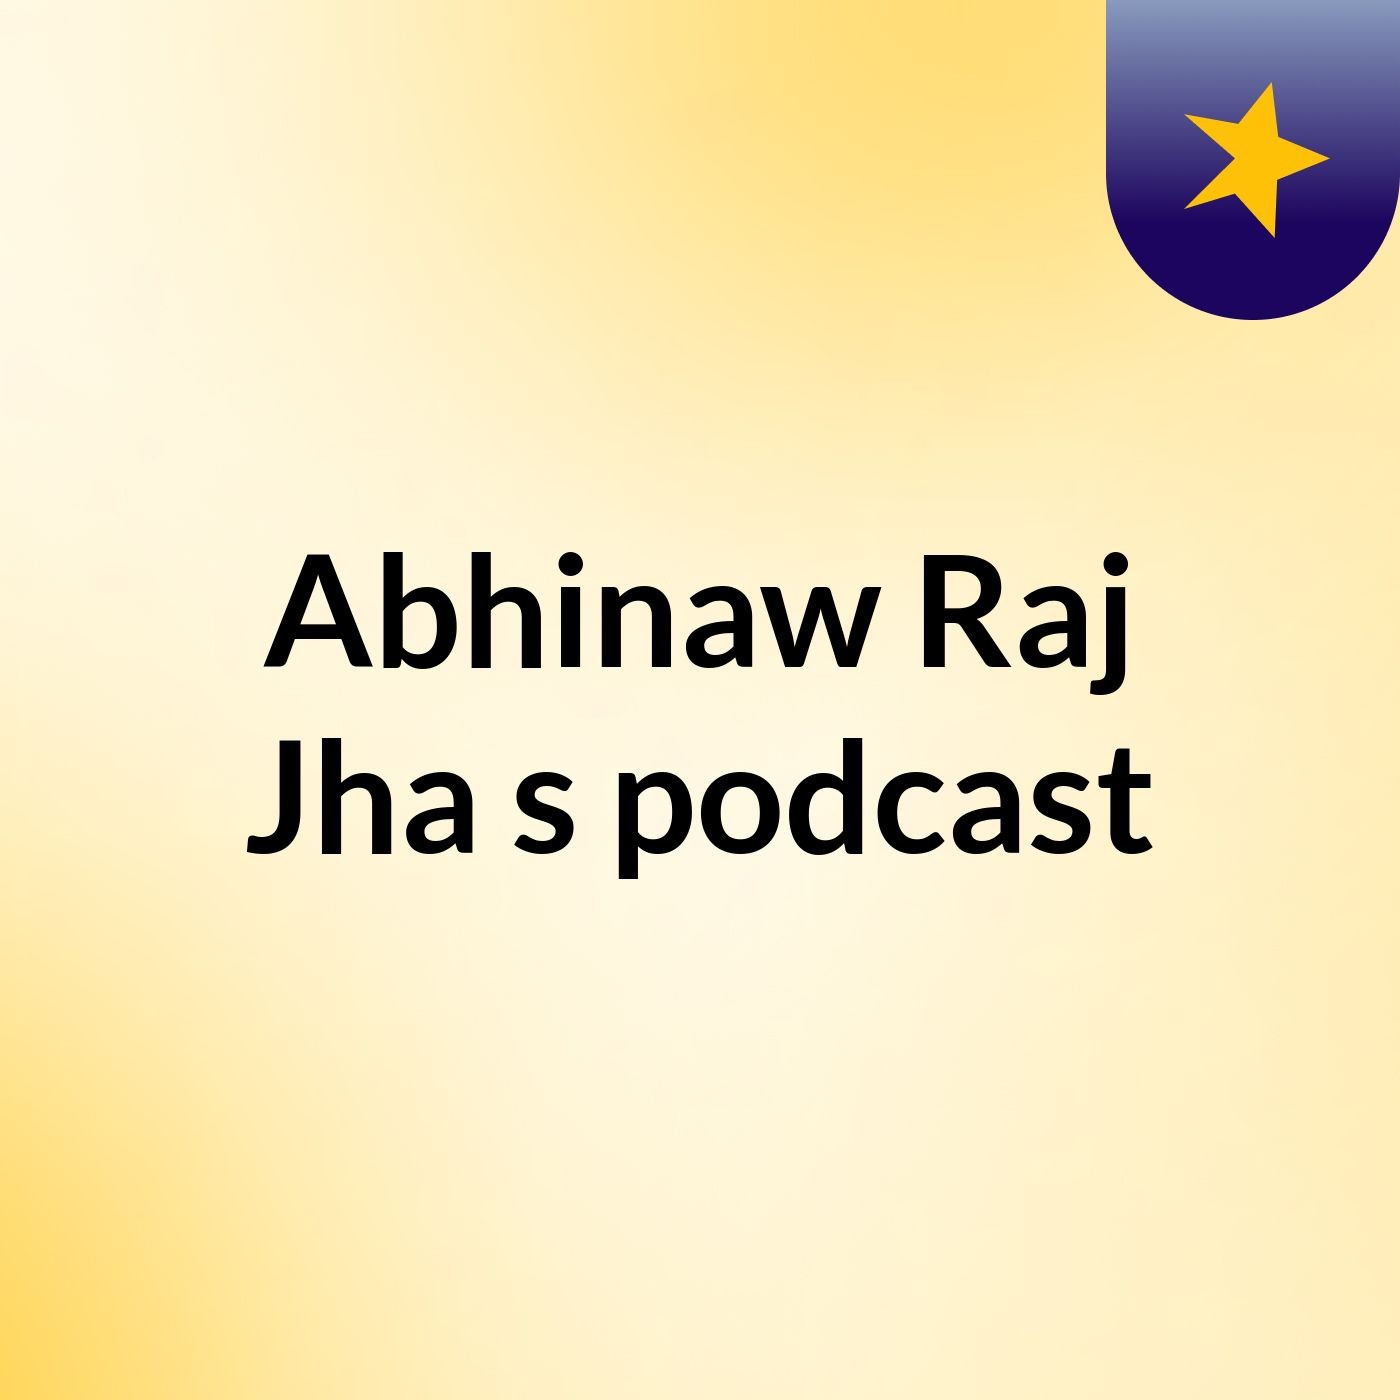 Episode 9 - Abhinaw Raj Jha's podcast